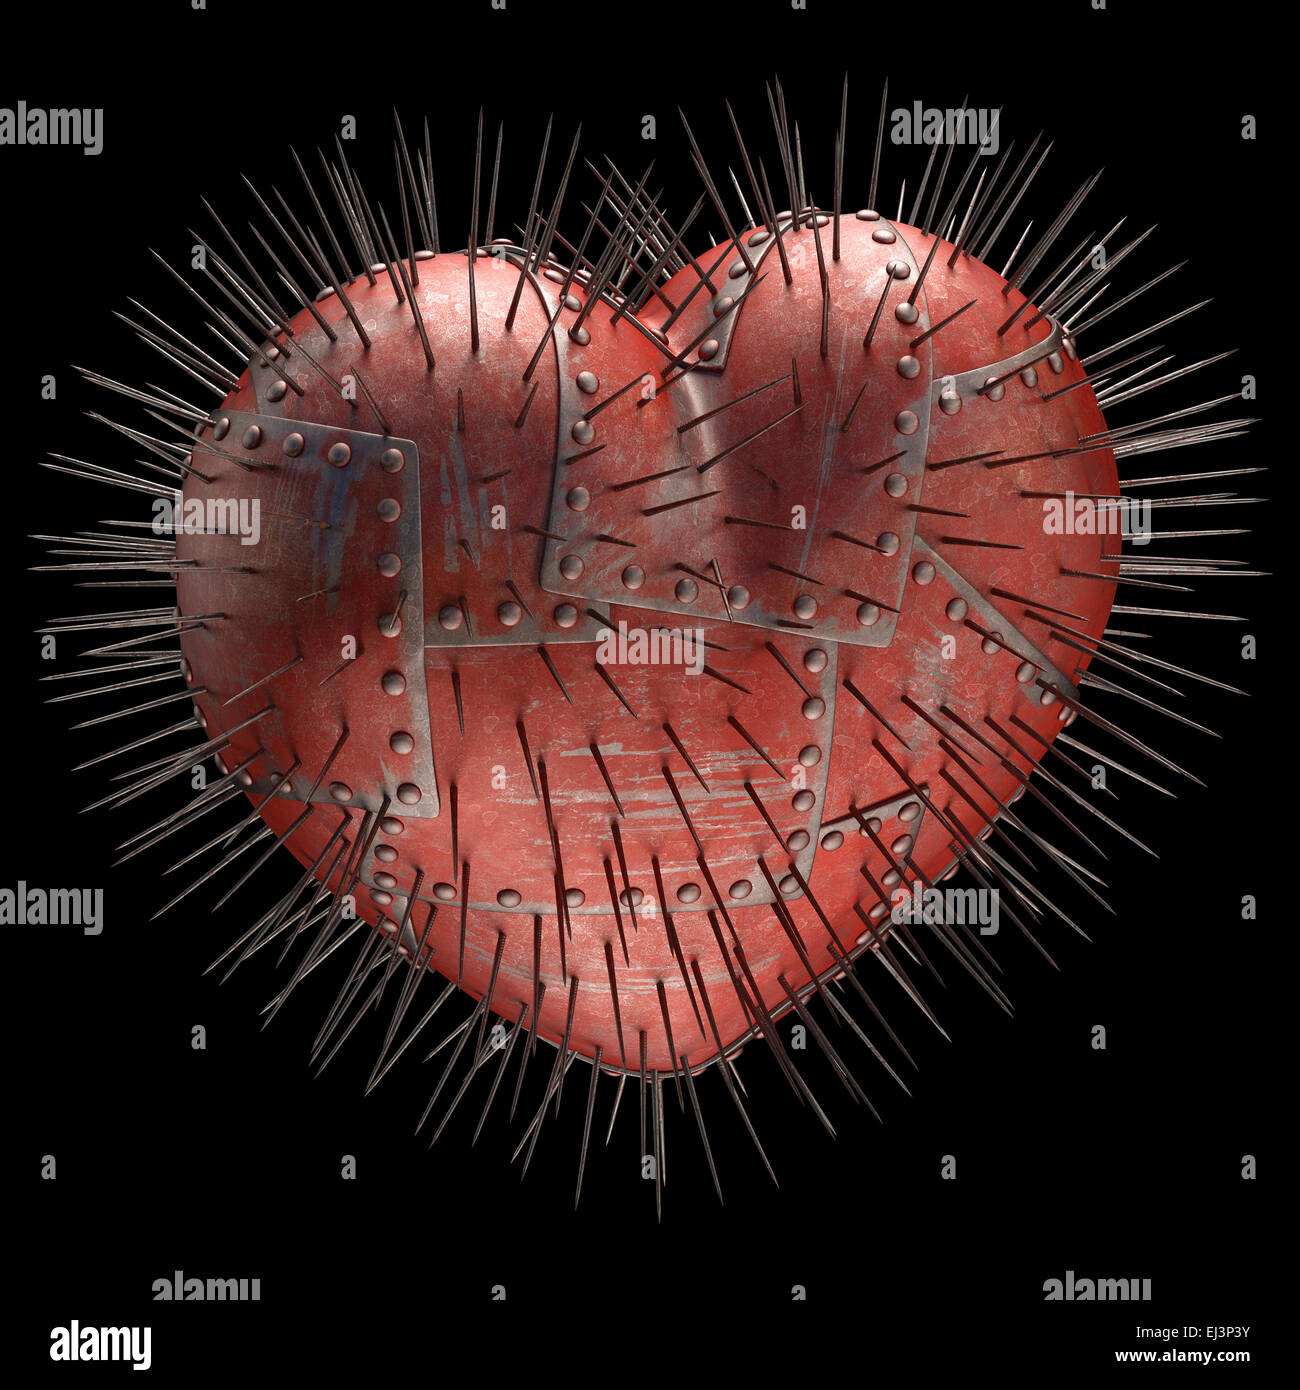 Steel heart with spikes, illustration Stock Photo